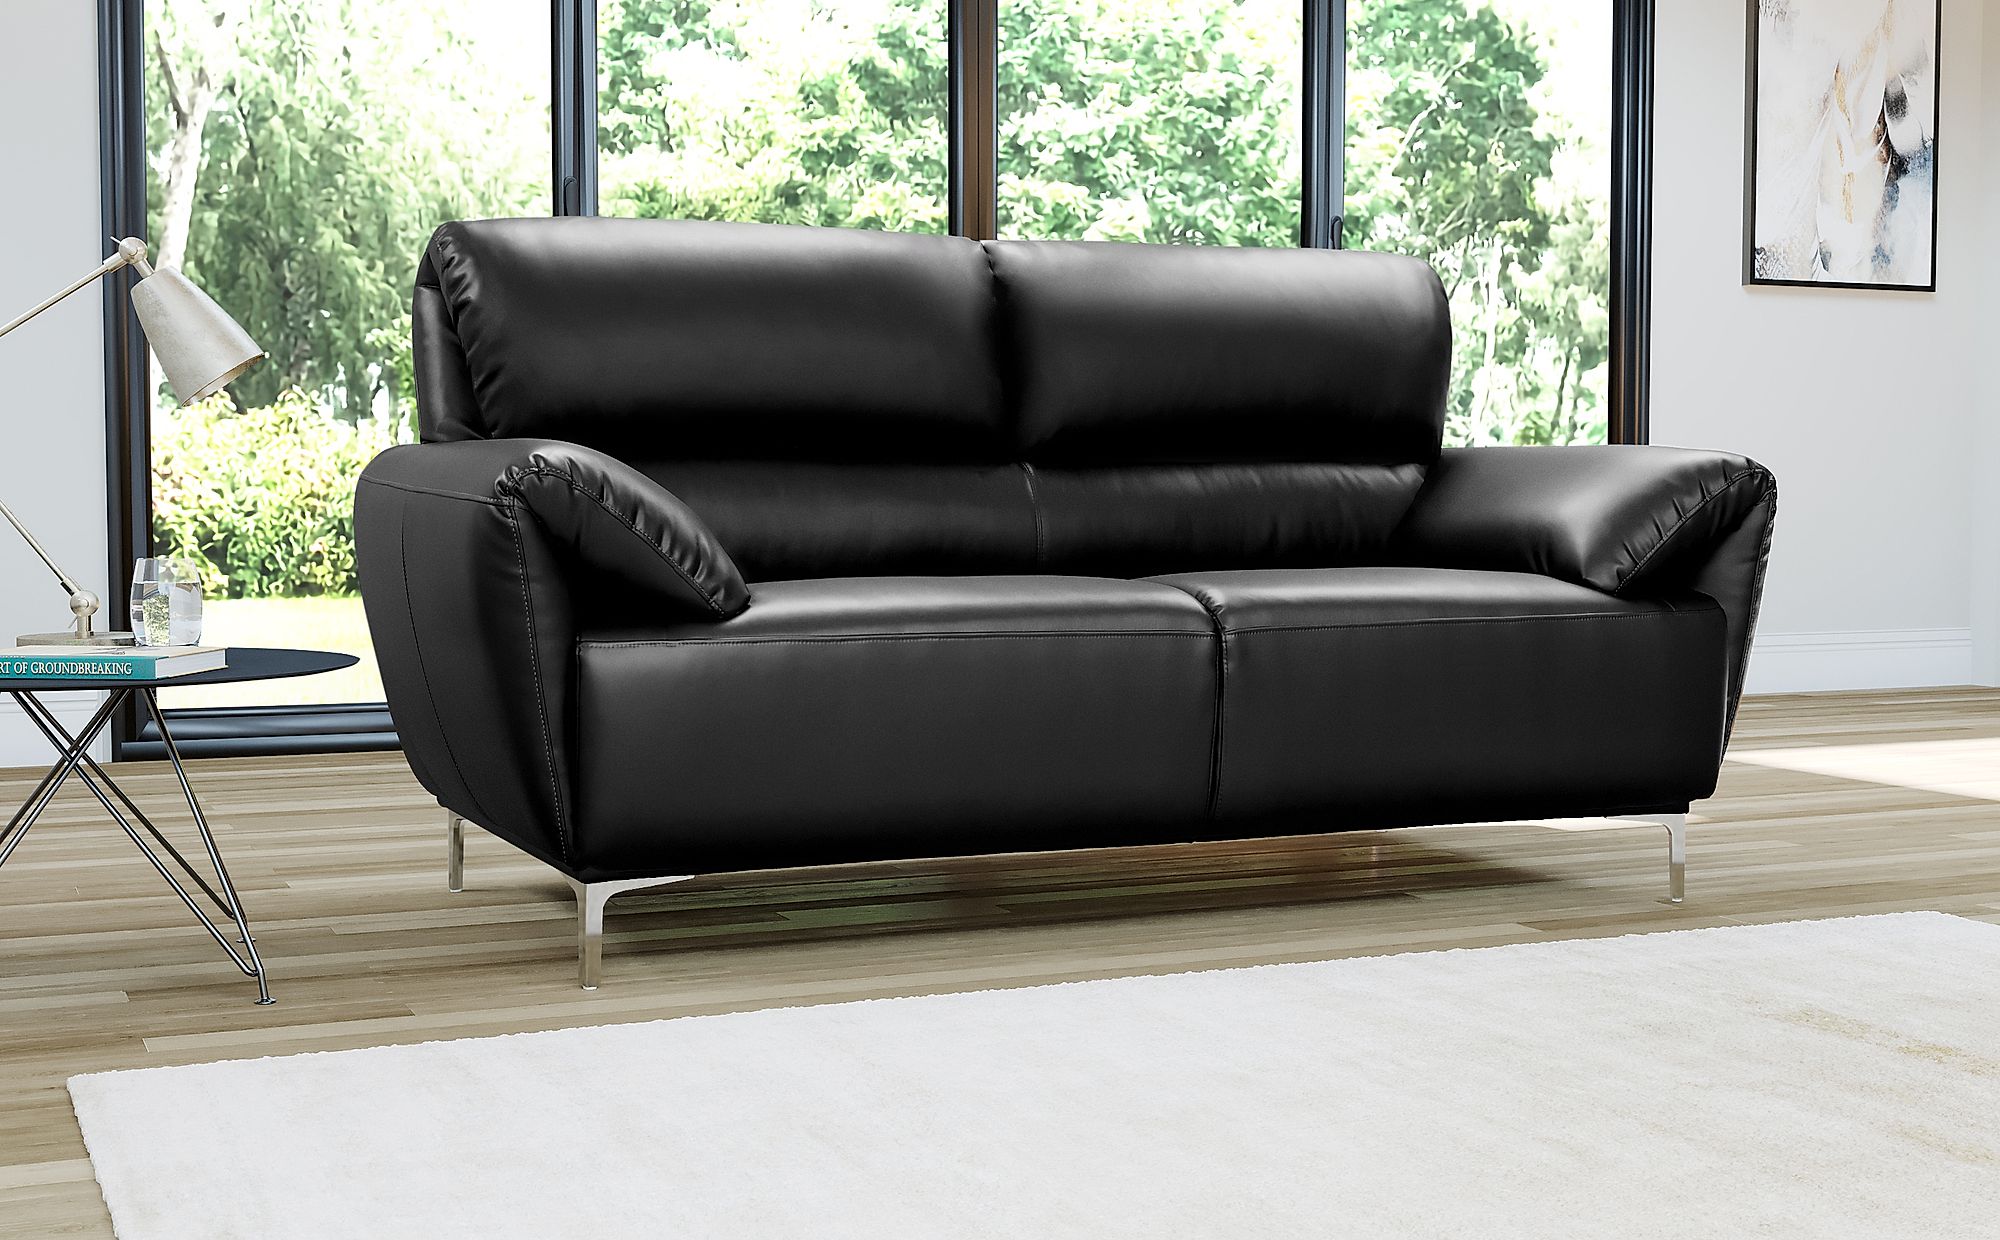 sofa leather black industrial design